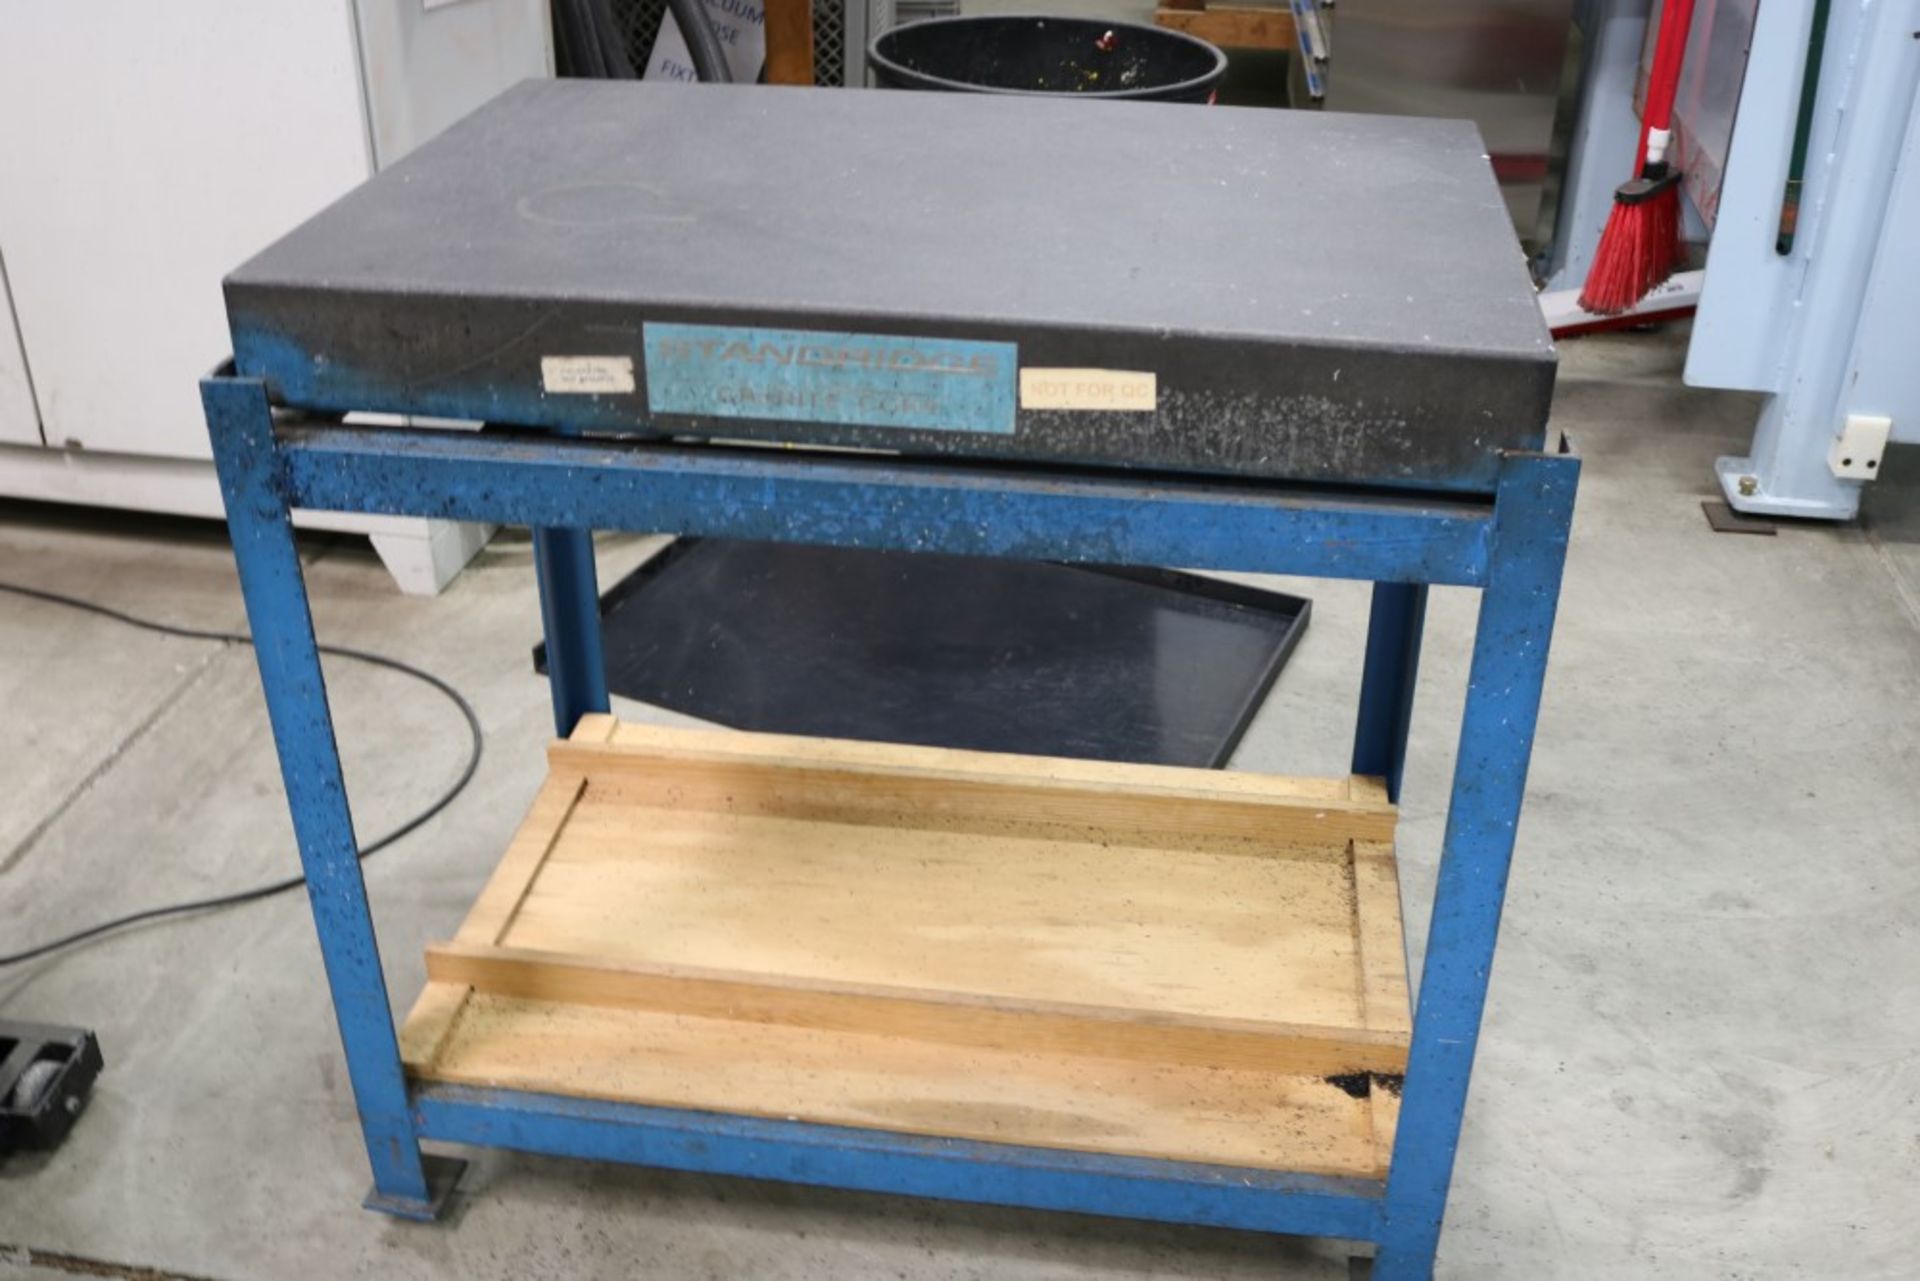 Standridge Granite Inspection Table on Metal Stand, 2' x 3' x 4"